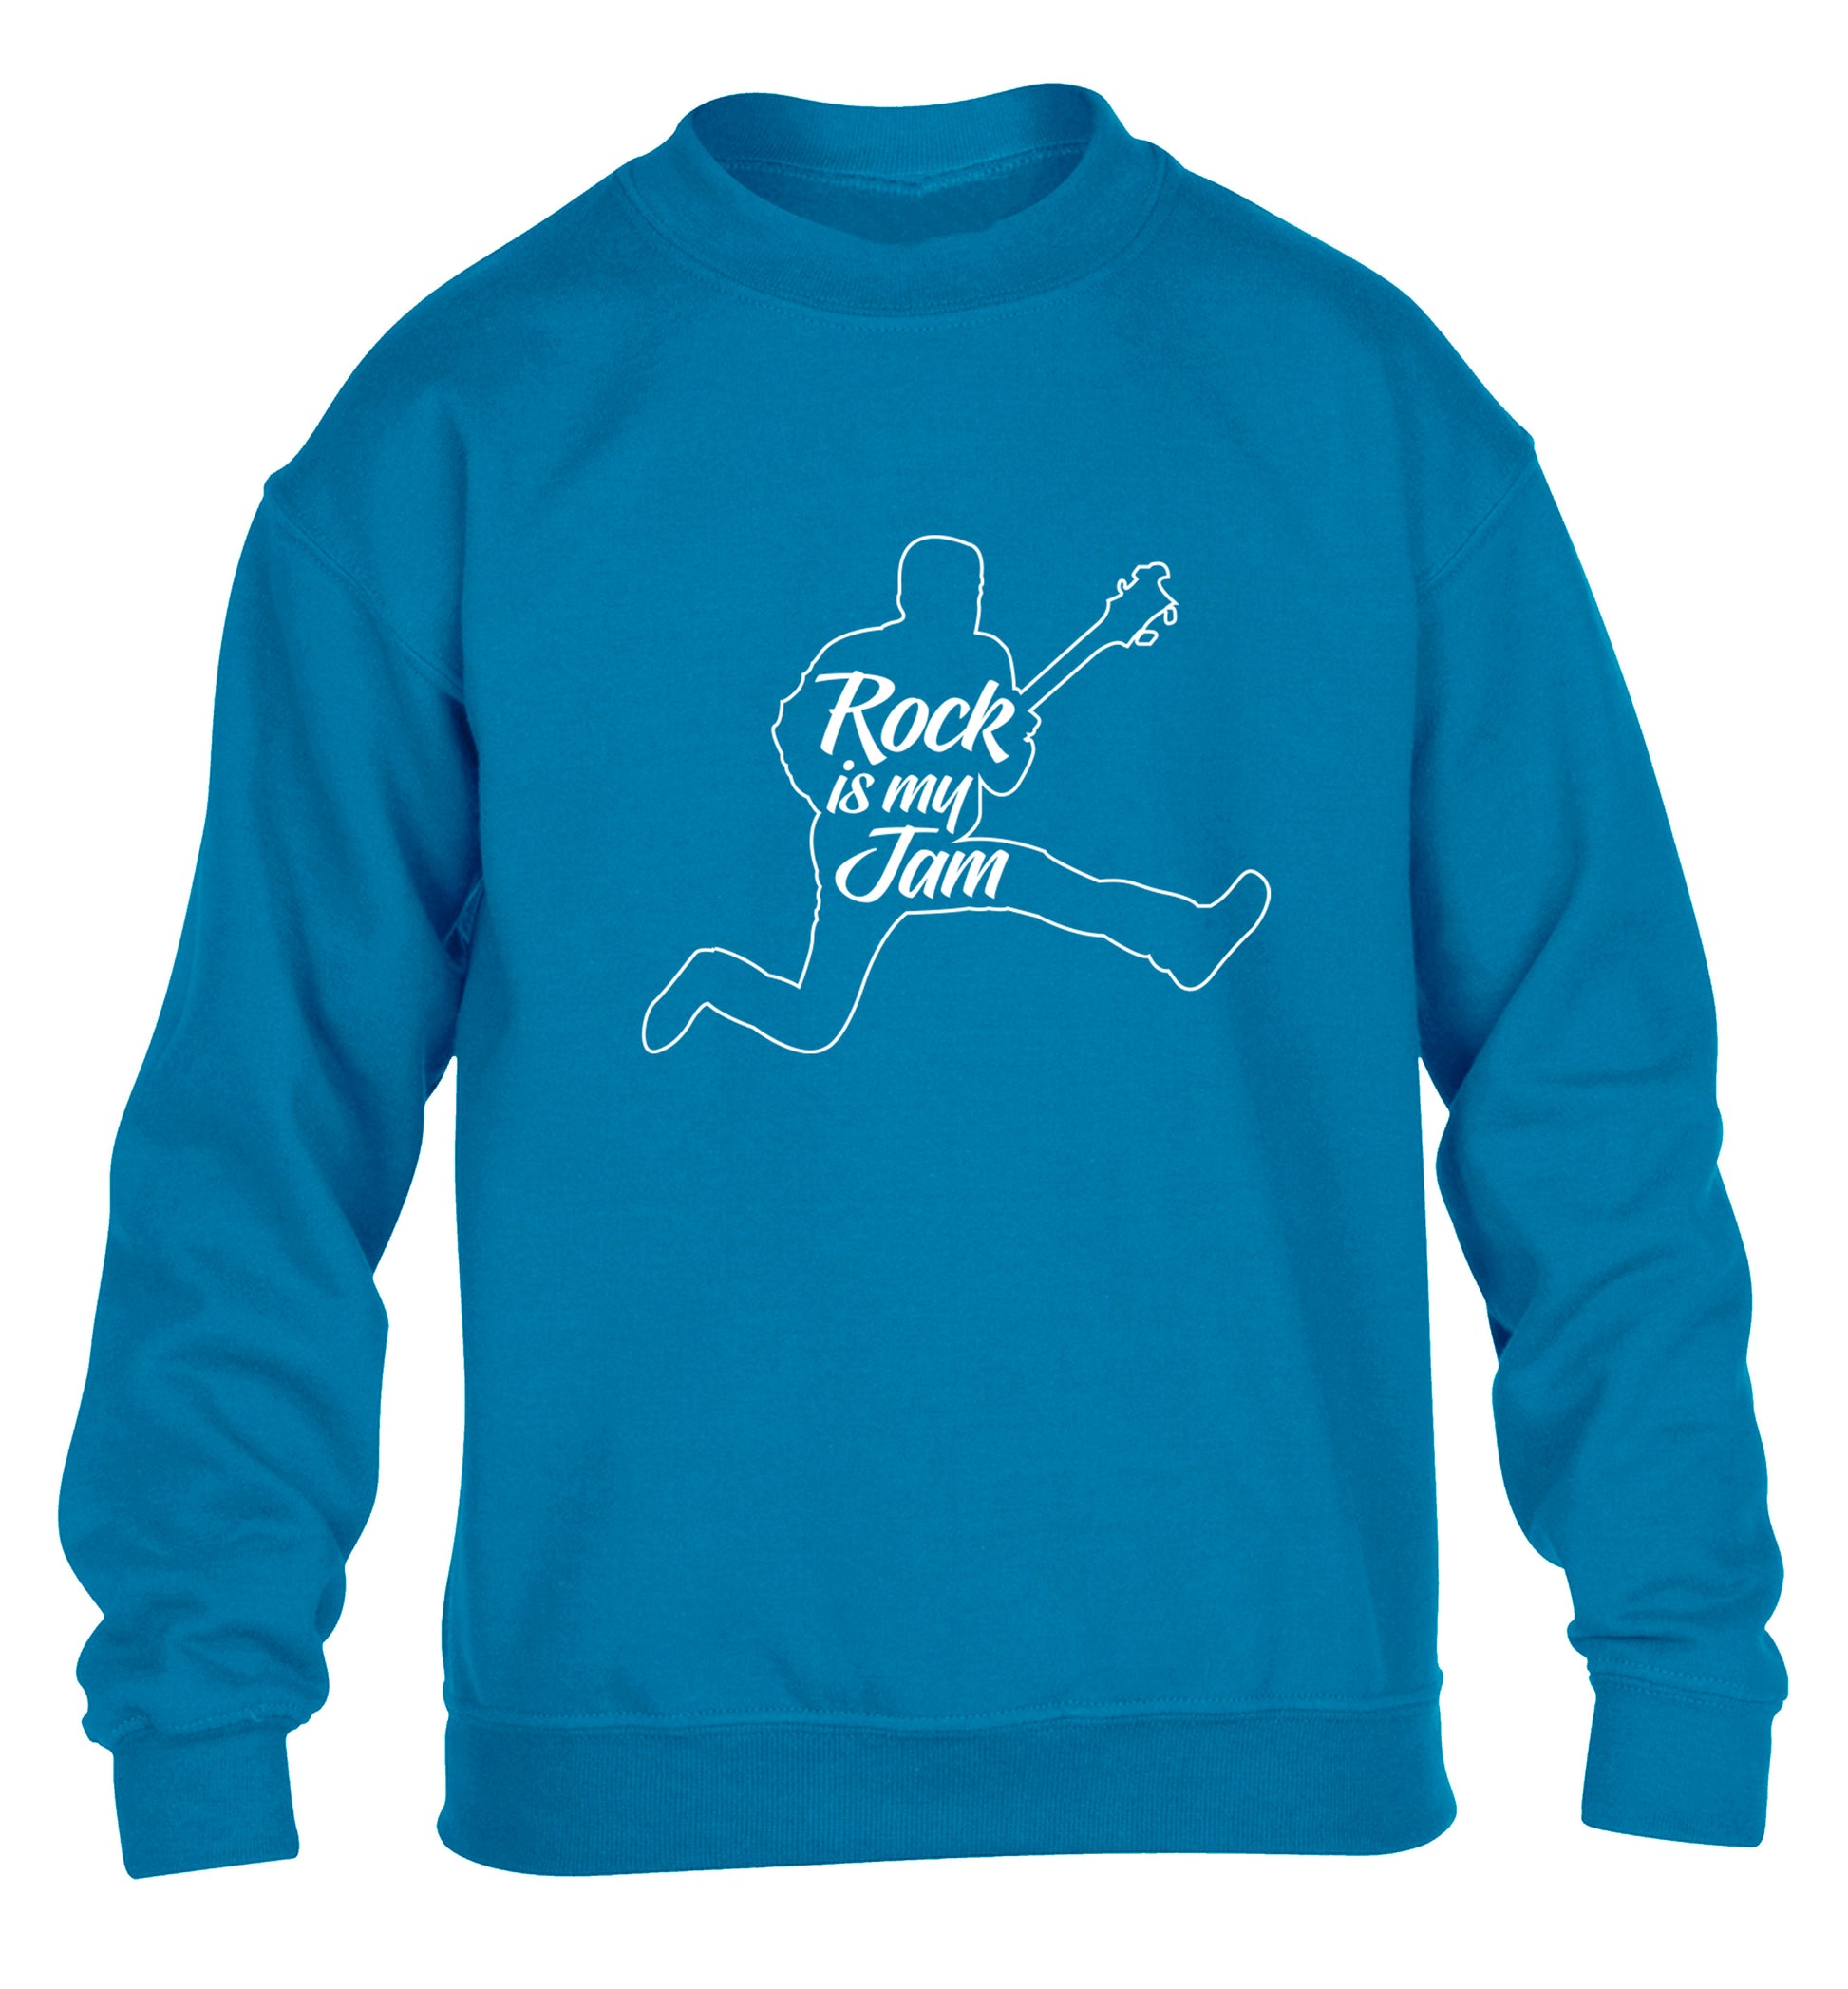 Rock is my jam children's blue sweater 12-13 Years